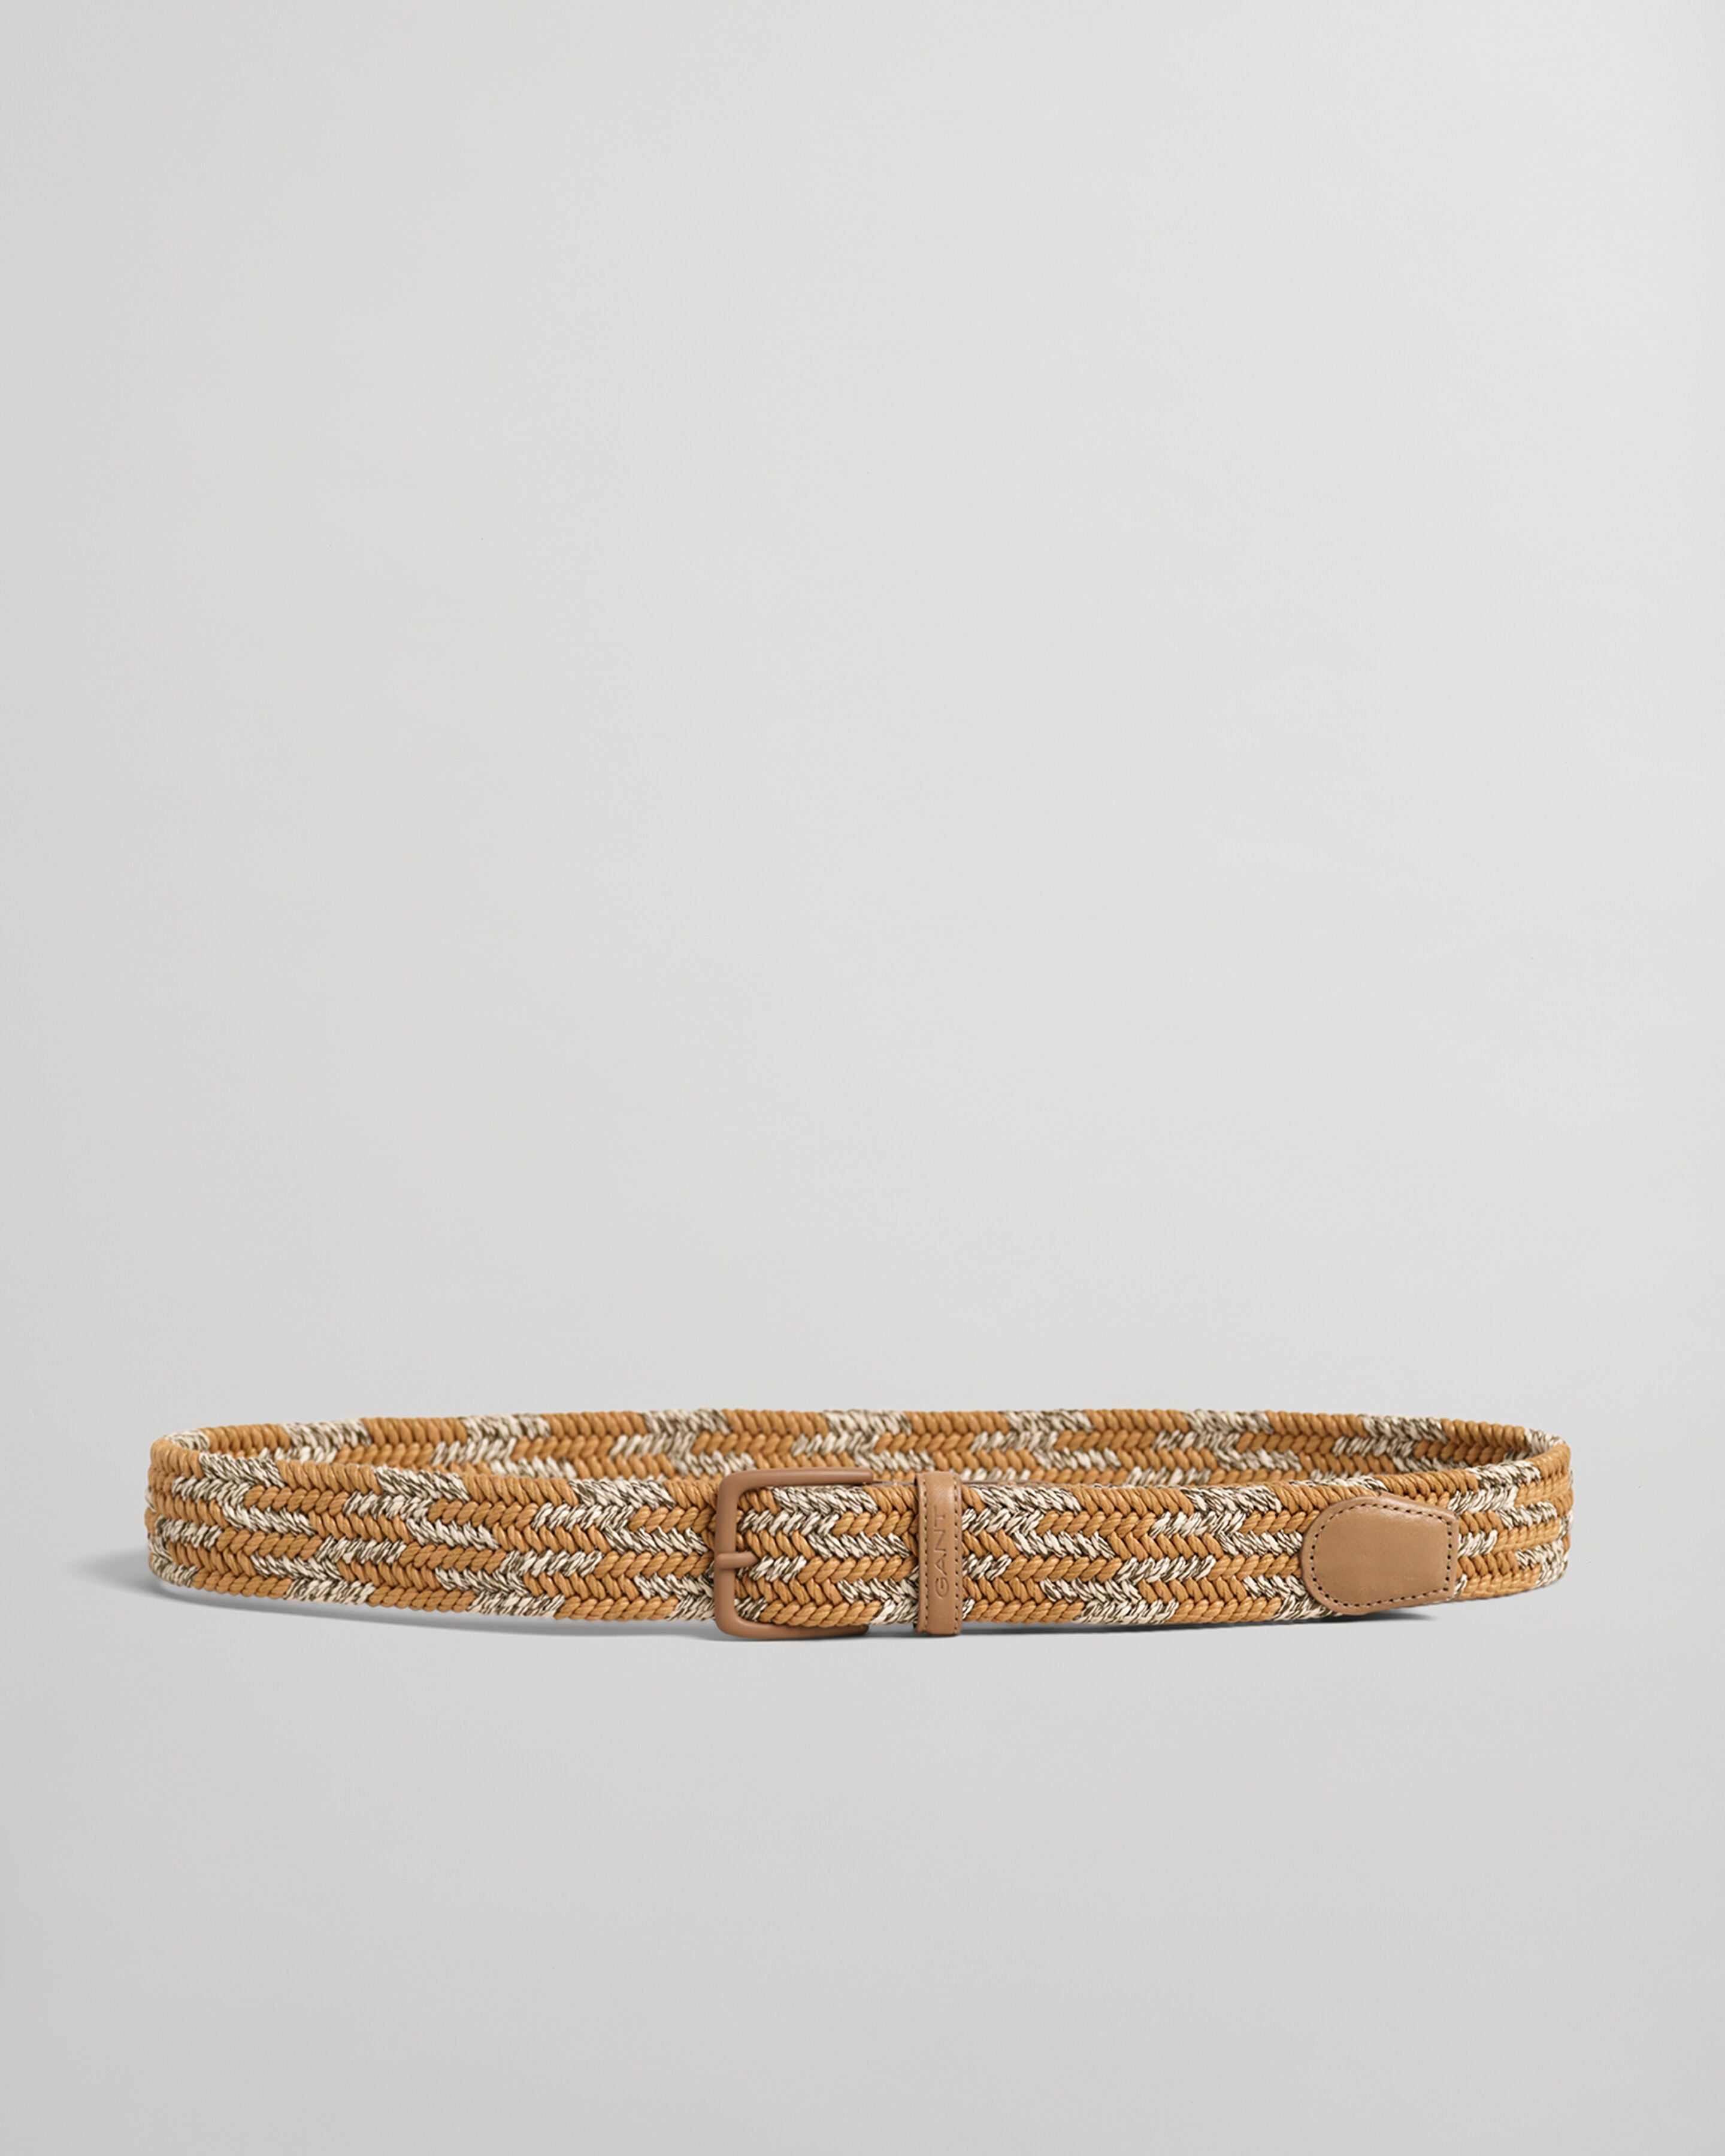 GANT - Contrast Braided Belt in Concrete Beige 9940151 270